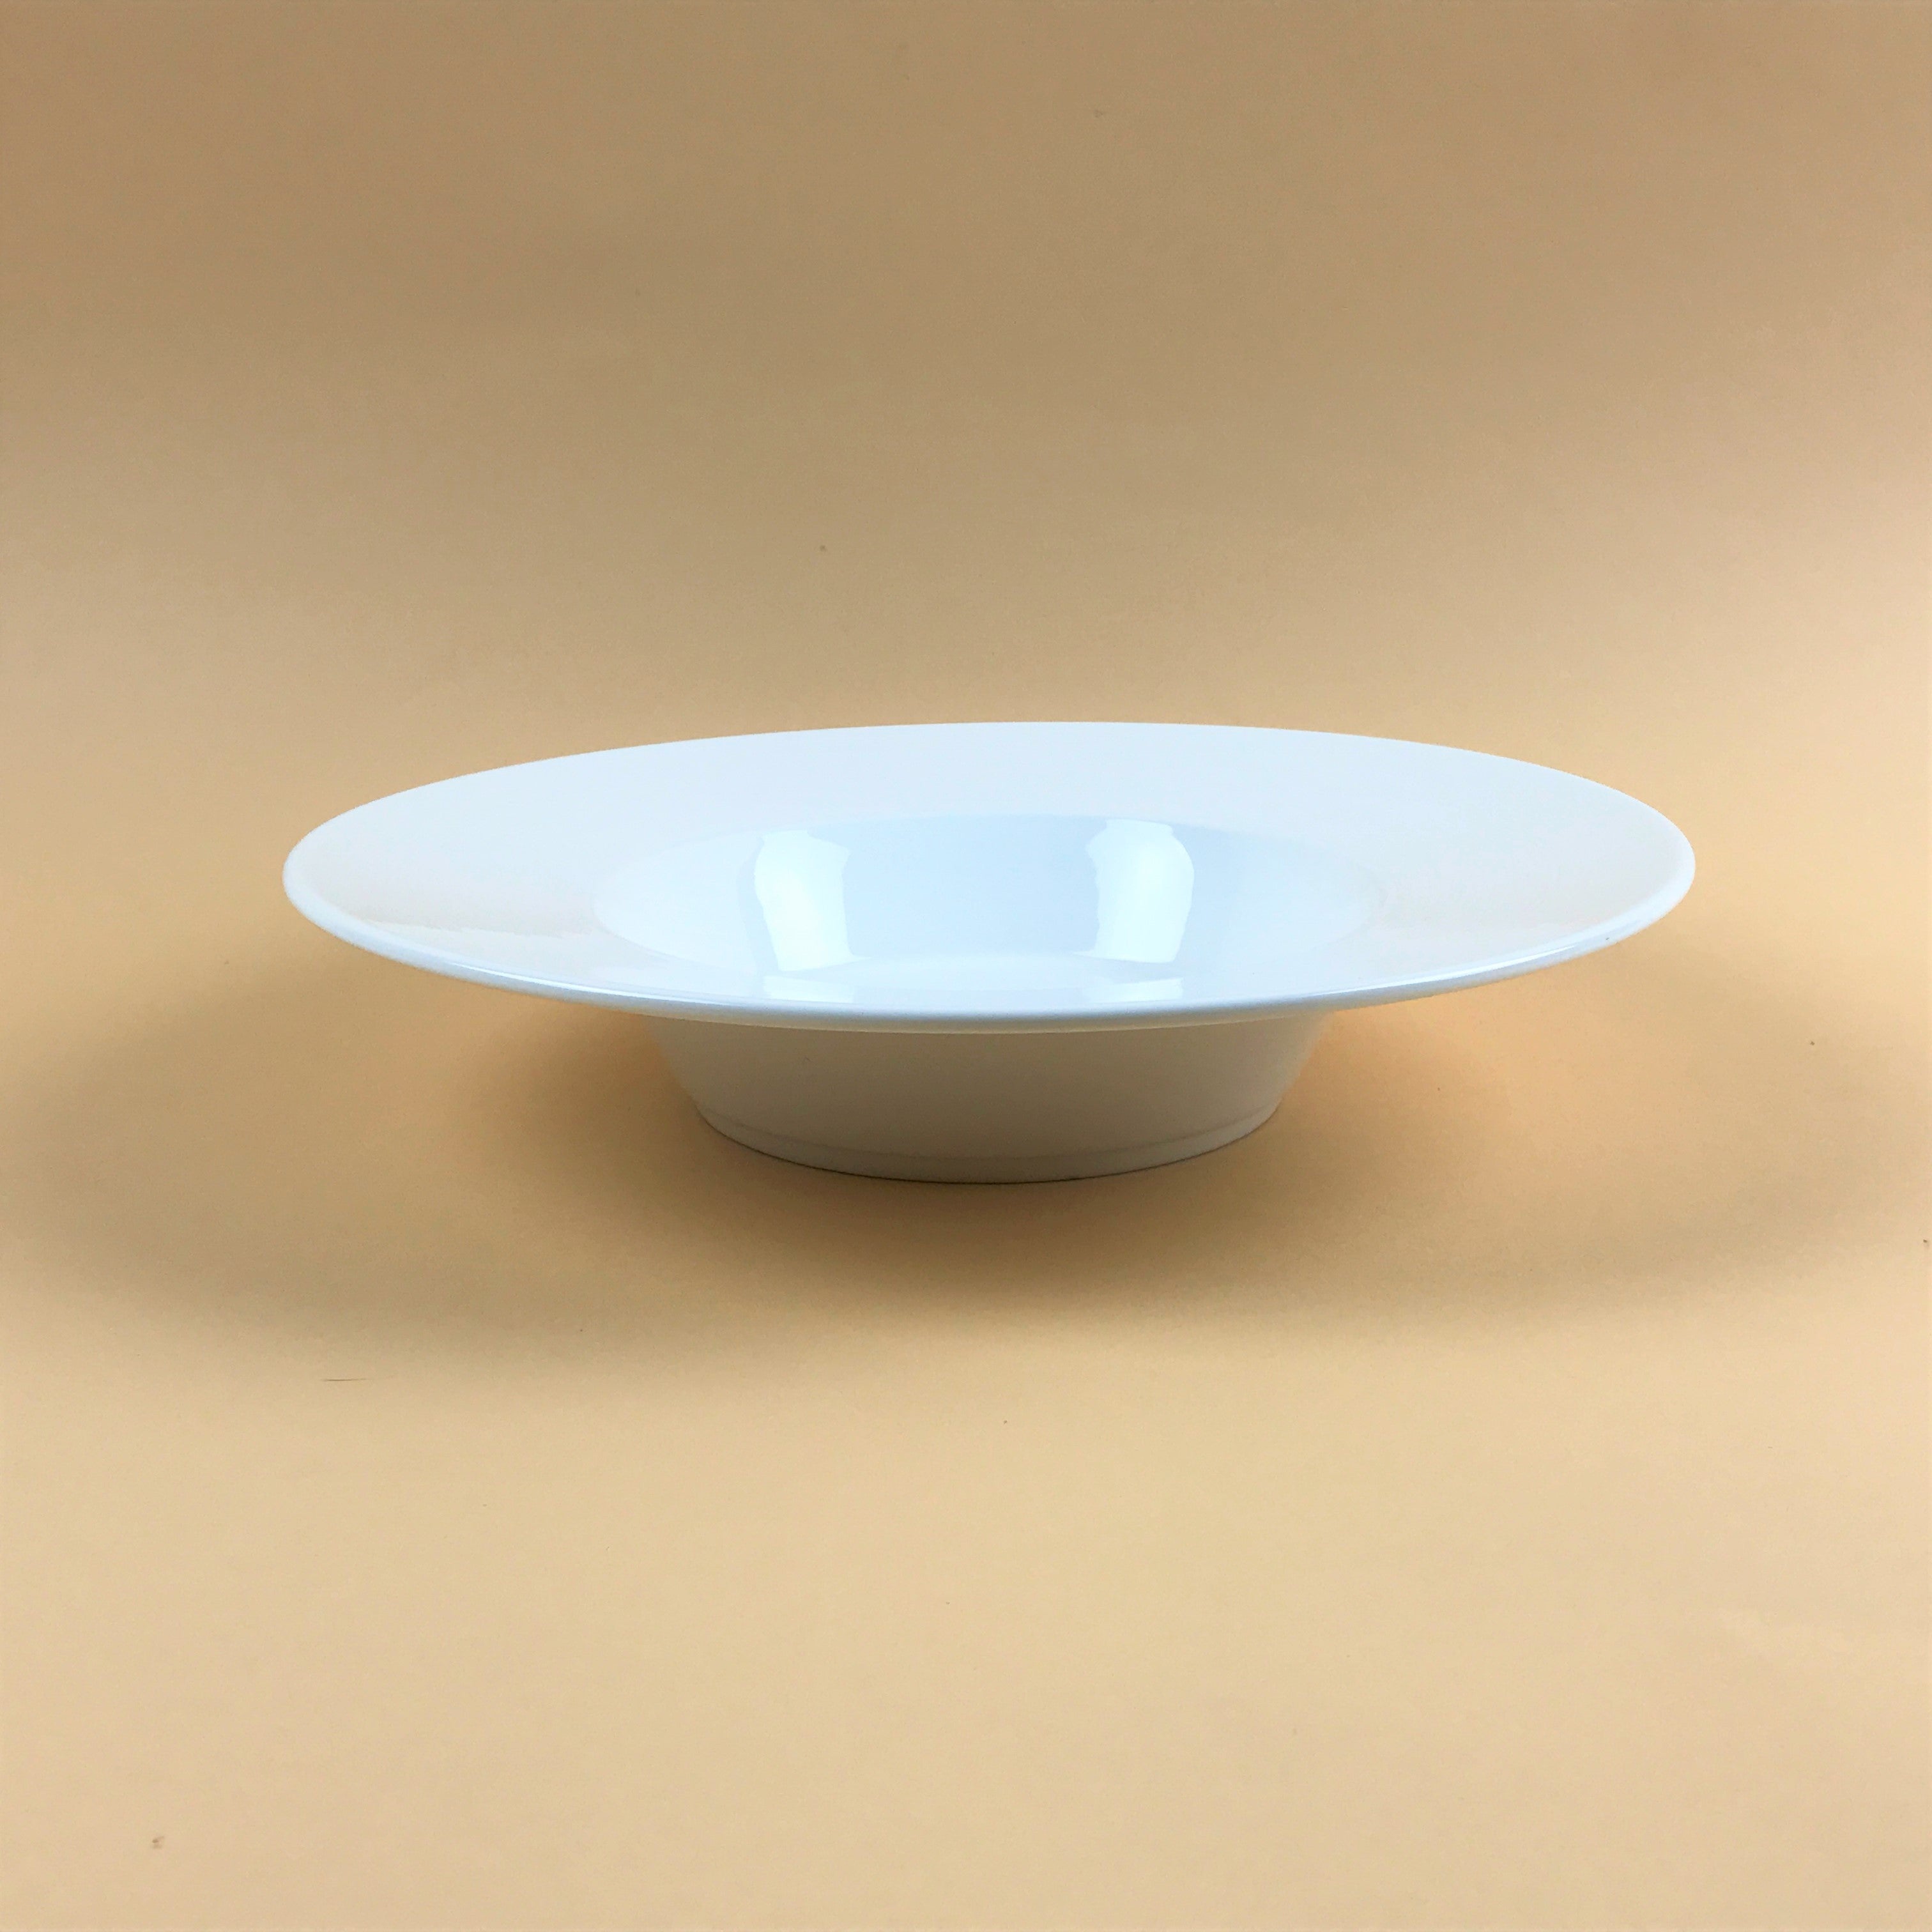 Wide rim bowl pasta plates durable white dinnerware restaurant supply Bowery discount sale OSARA New York